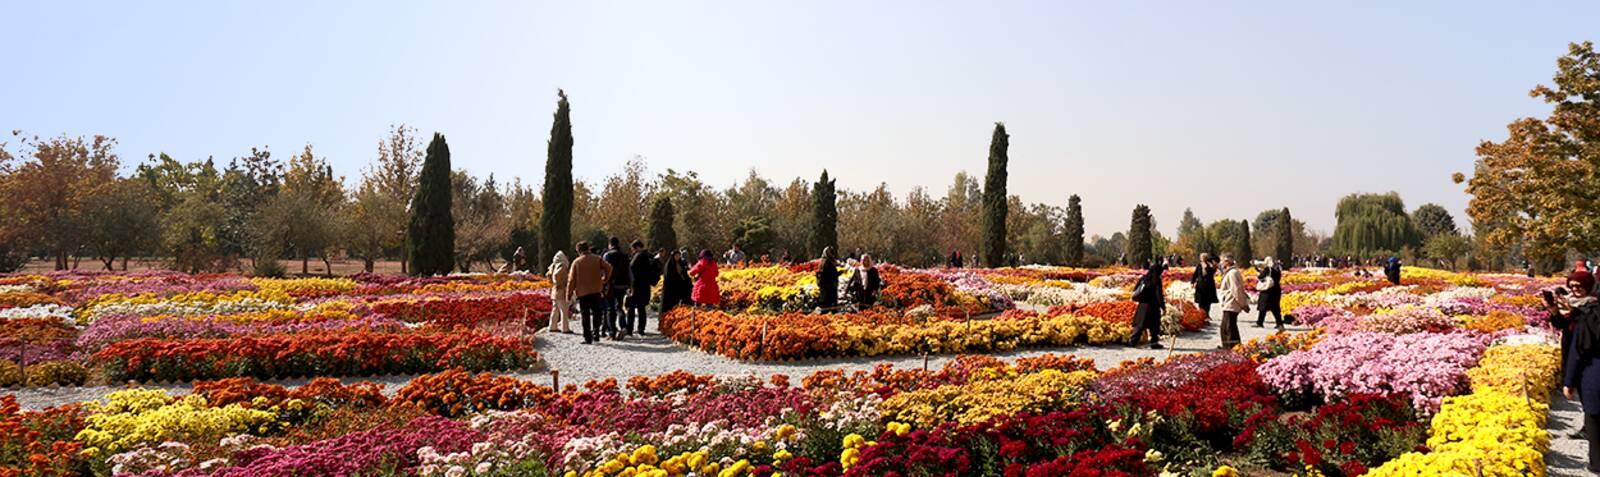 National Botanical Garden of Iran